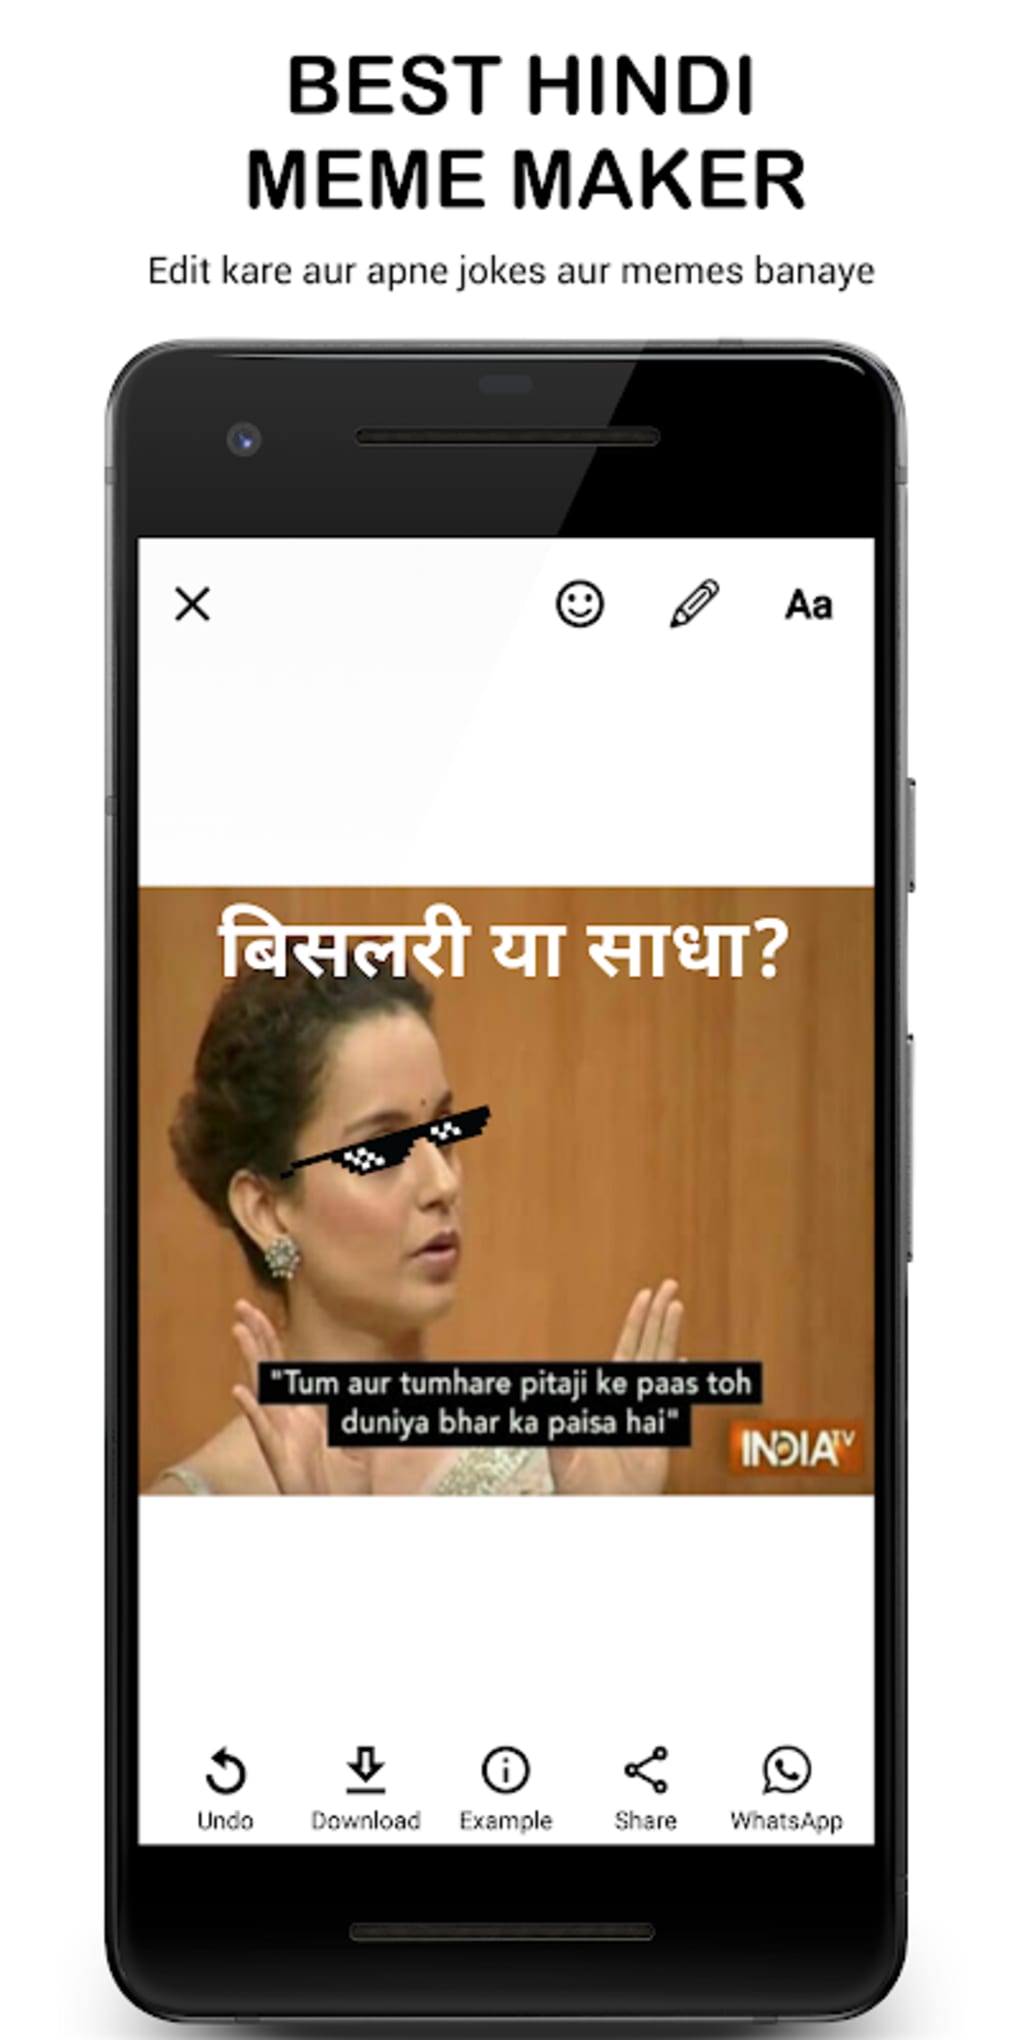 Indian Meme Templates, Meme Creator & Troll Maker Apk For Android - Download